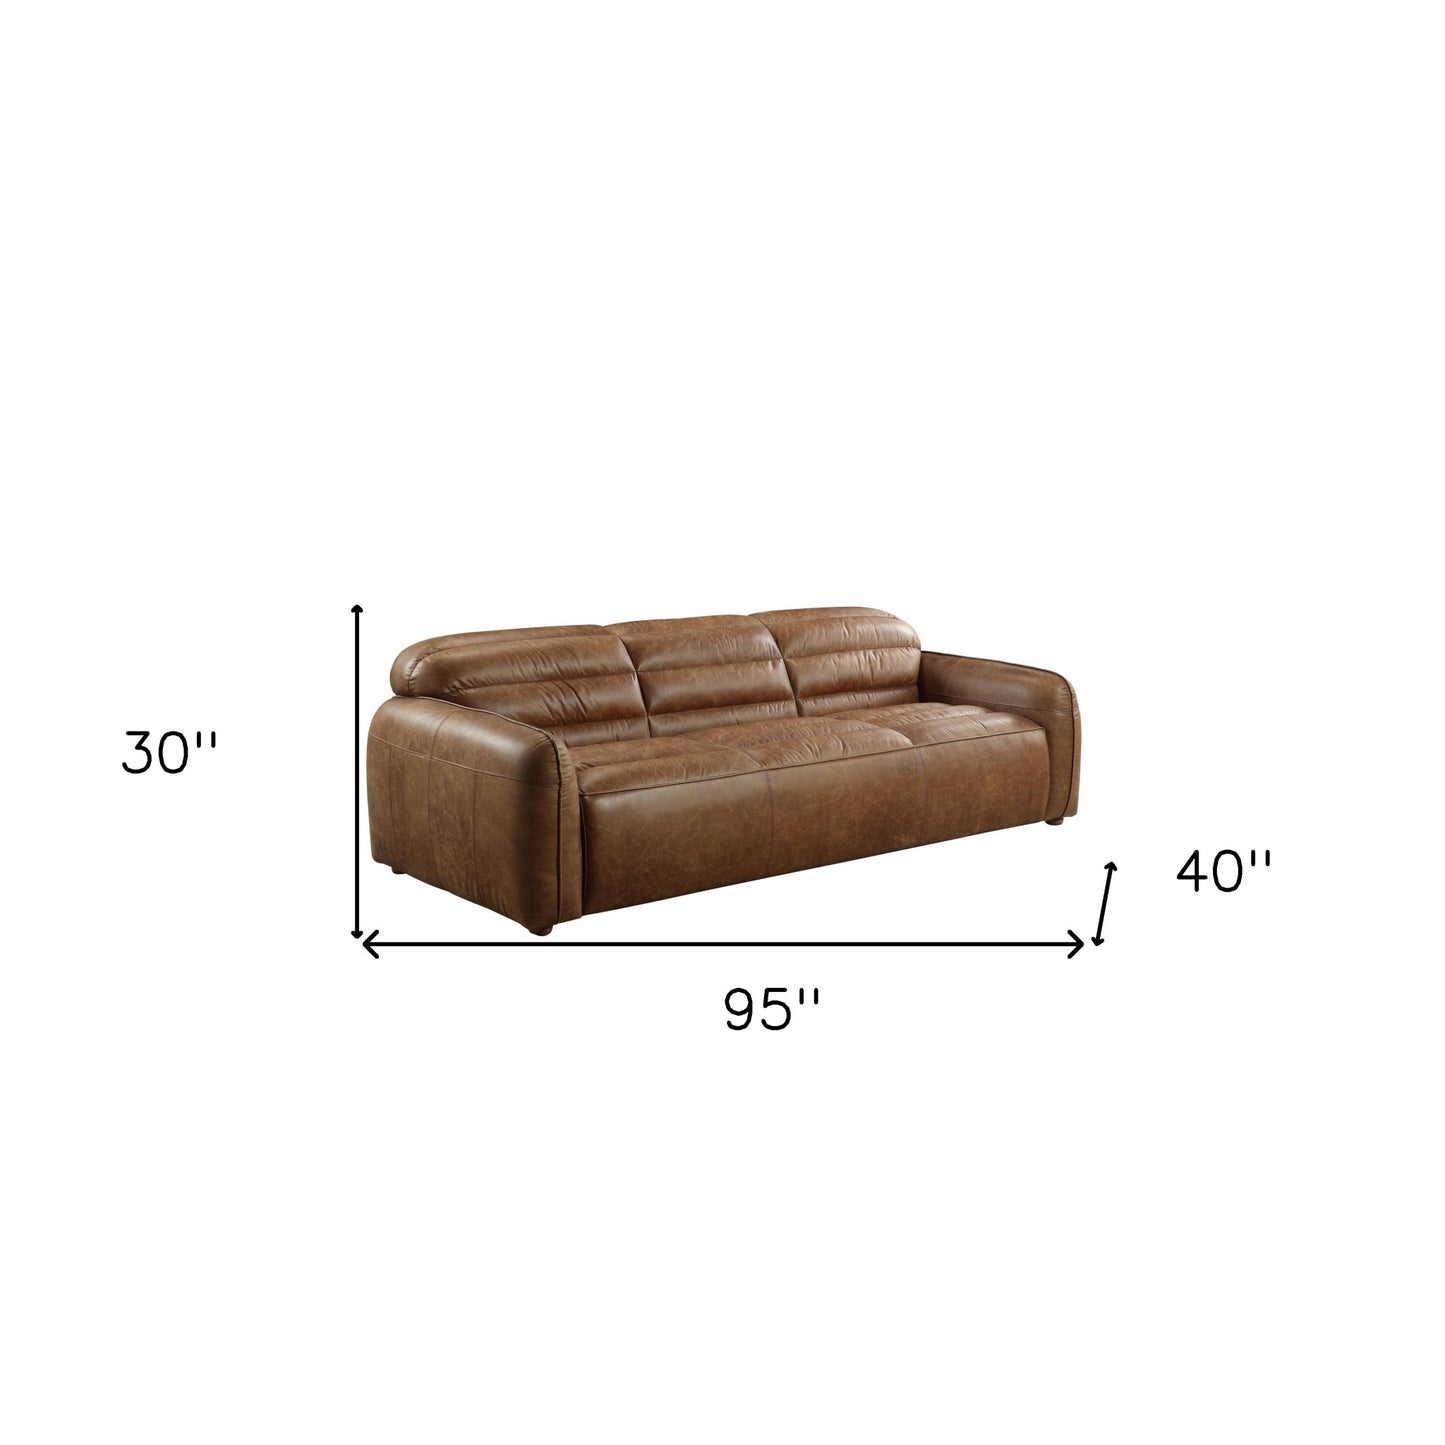 95" Dark Brown Top Grain Leather Sofa With Black Legs